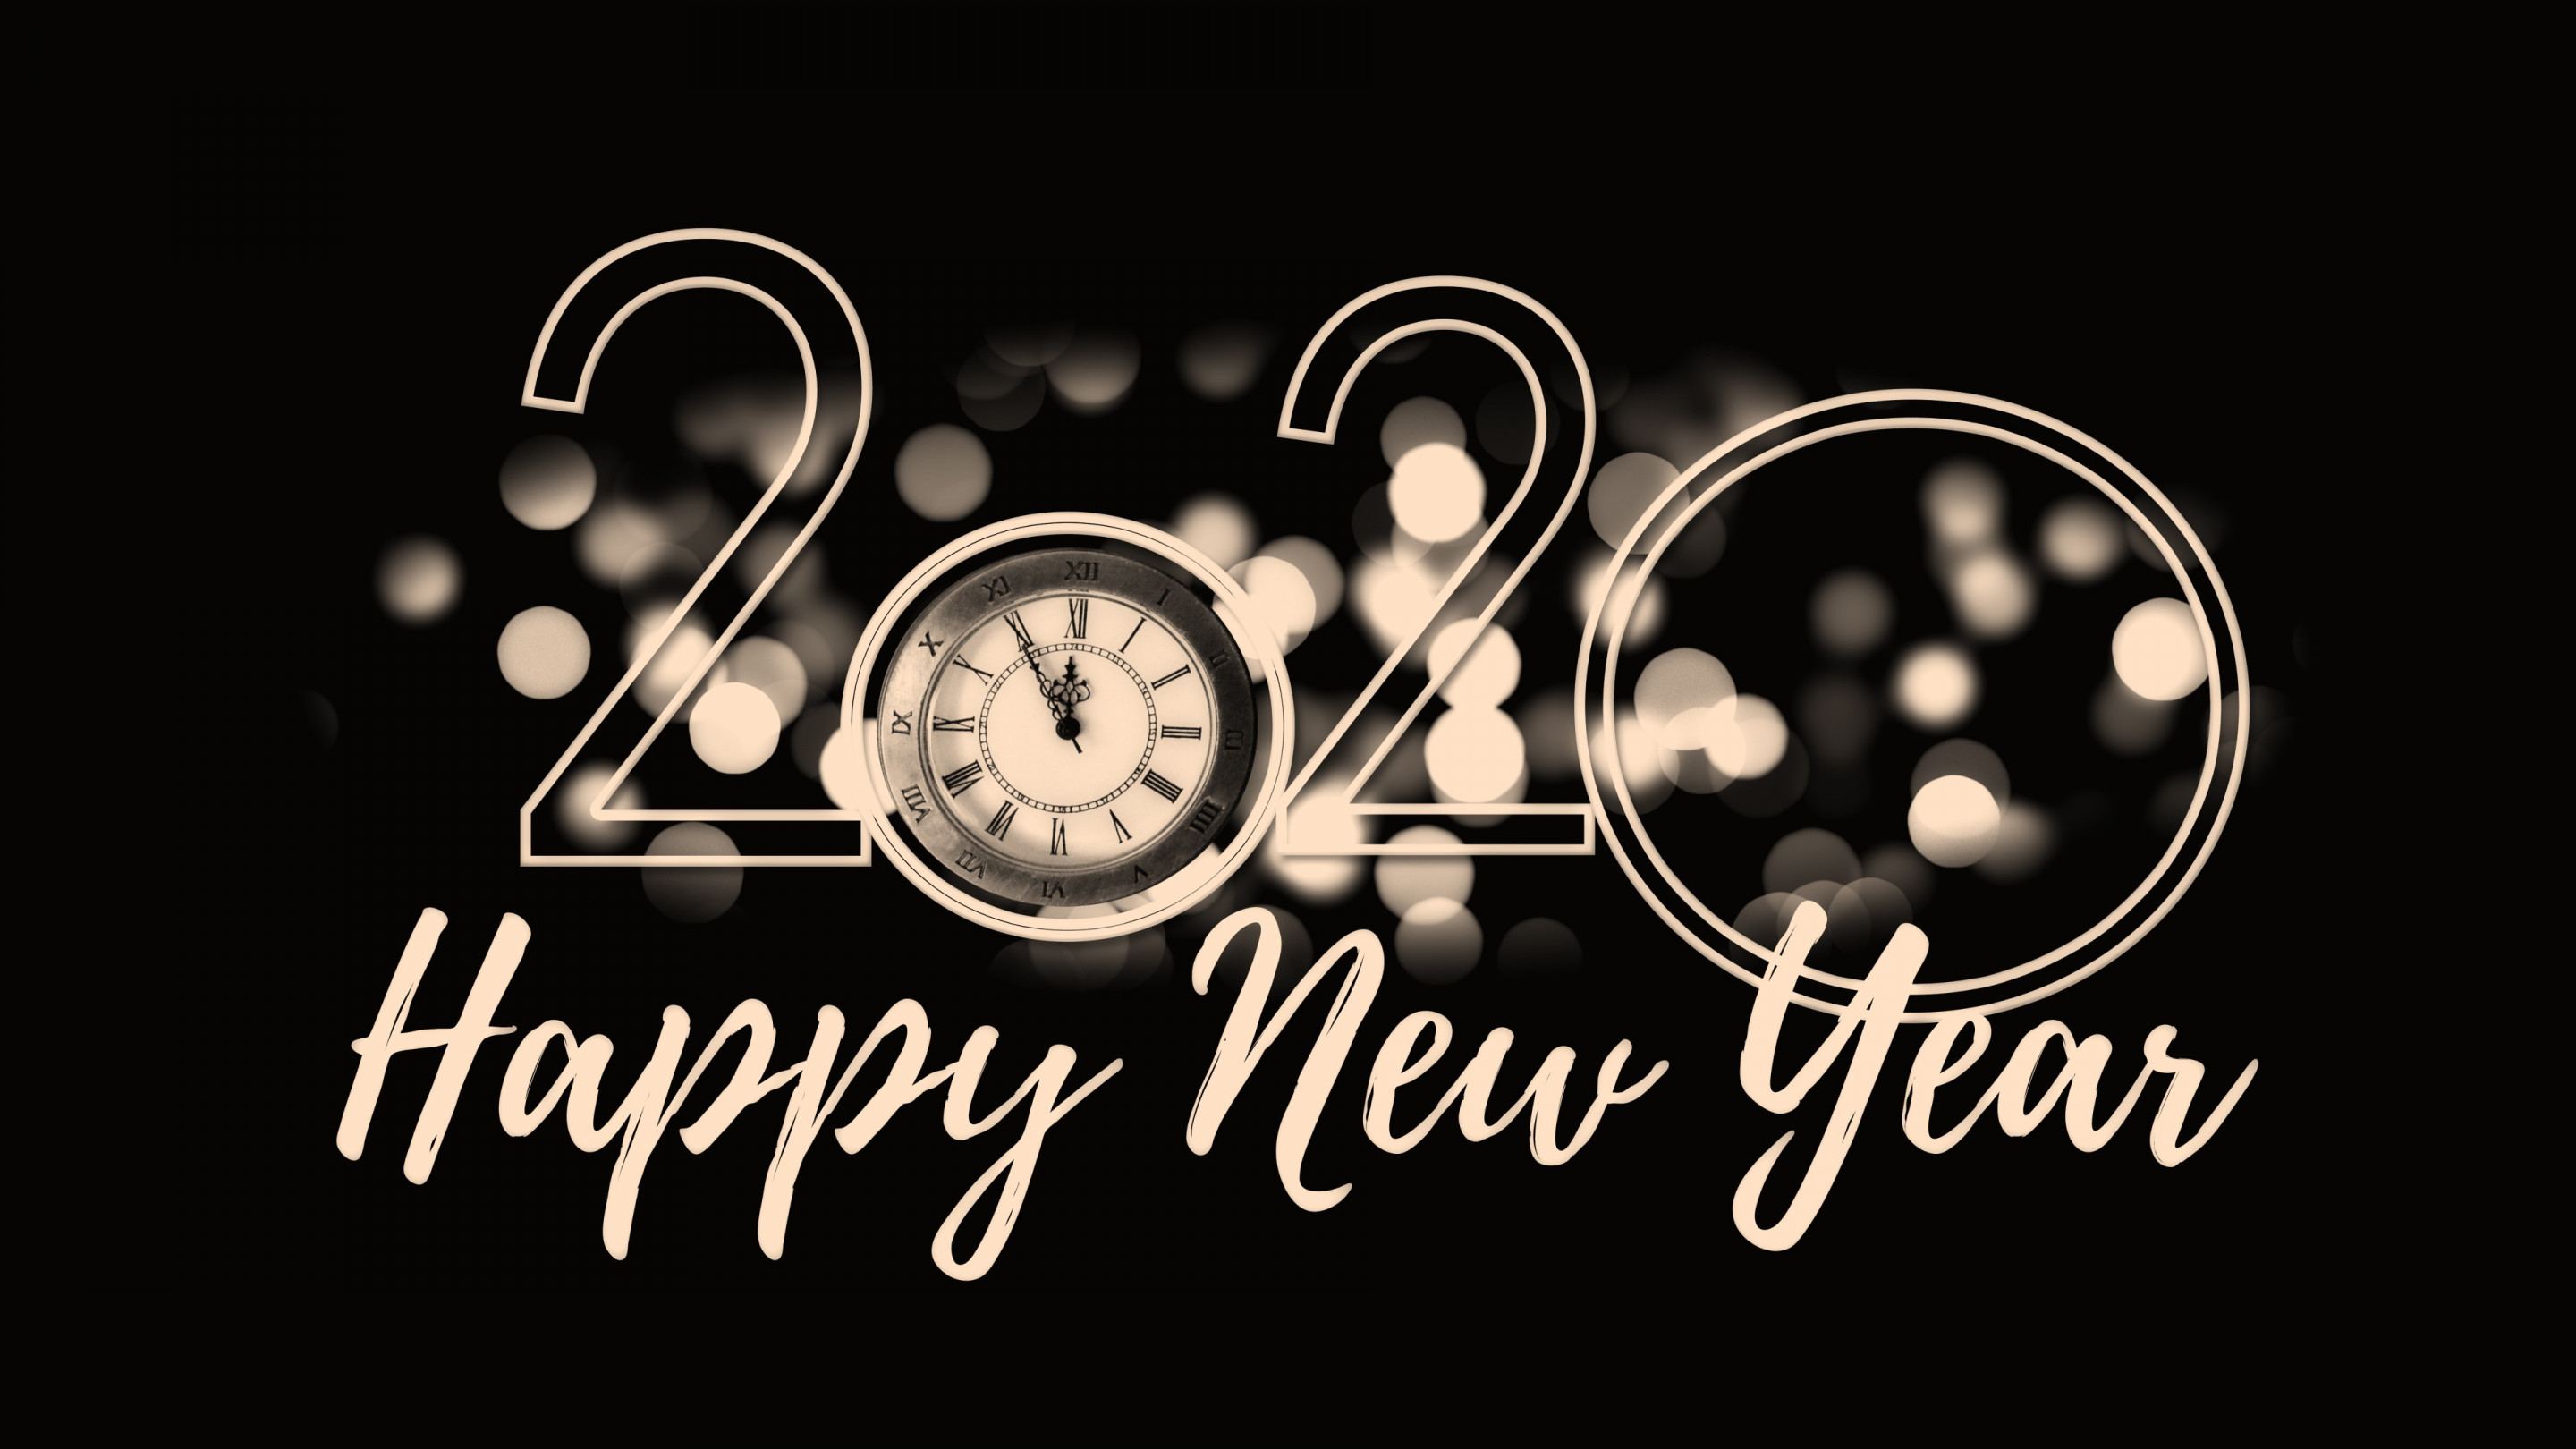 2020 Happy New Year wallpaper 2880x1620